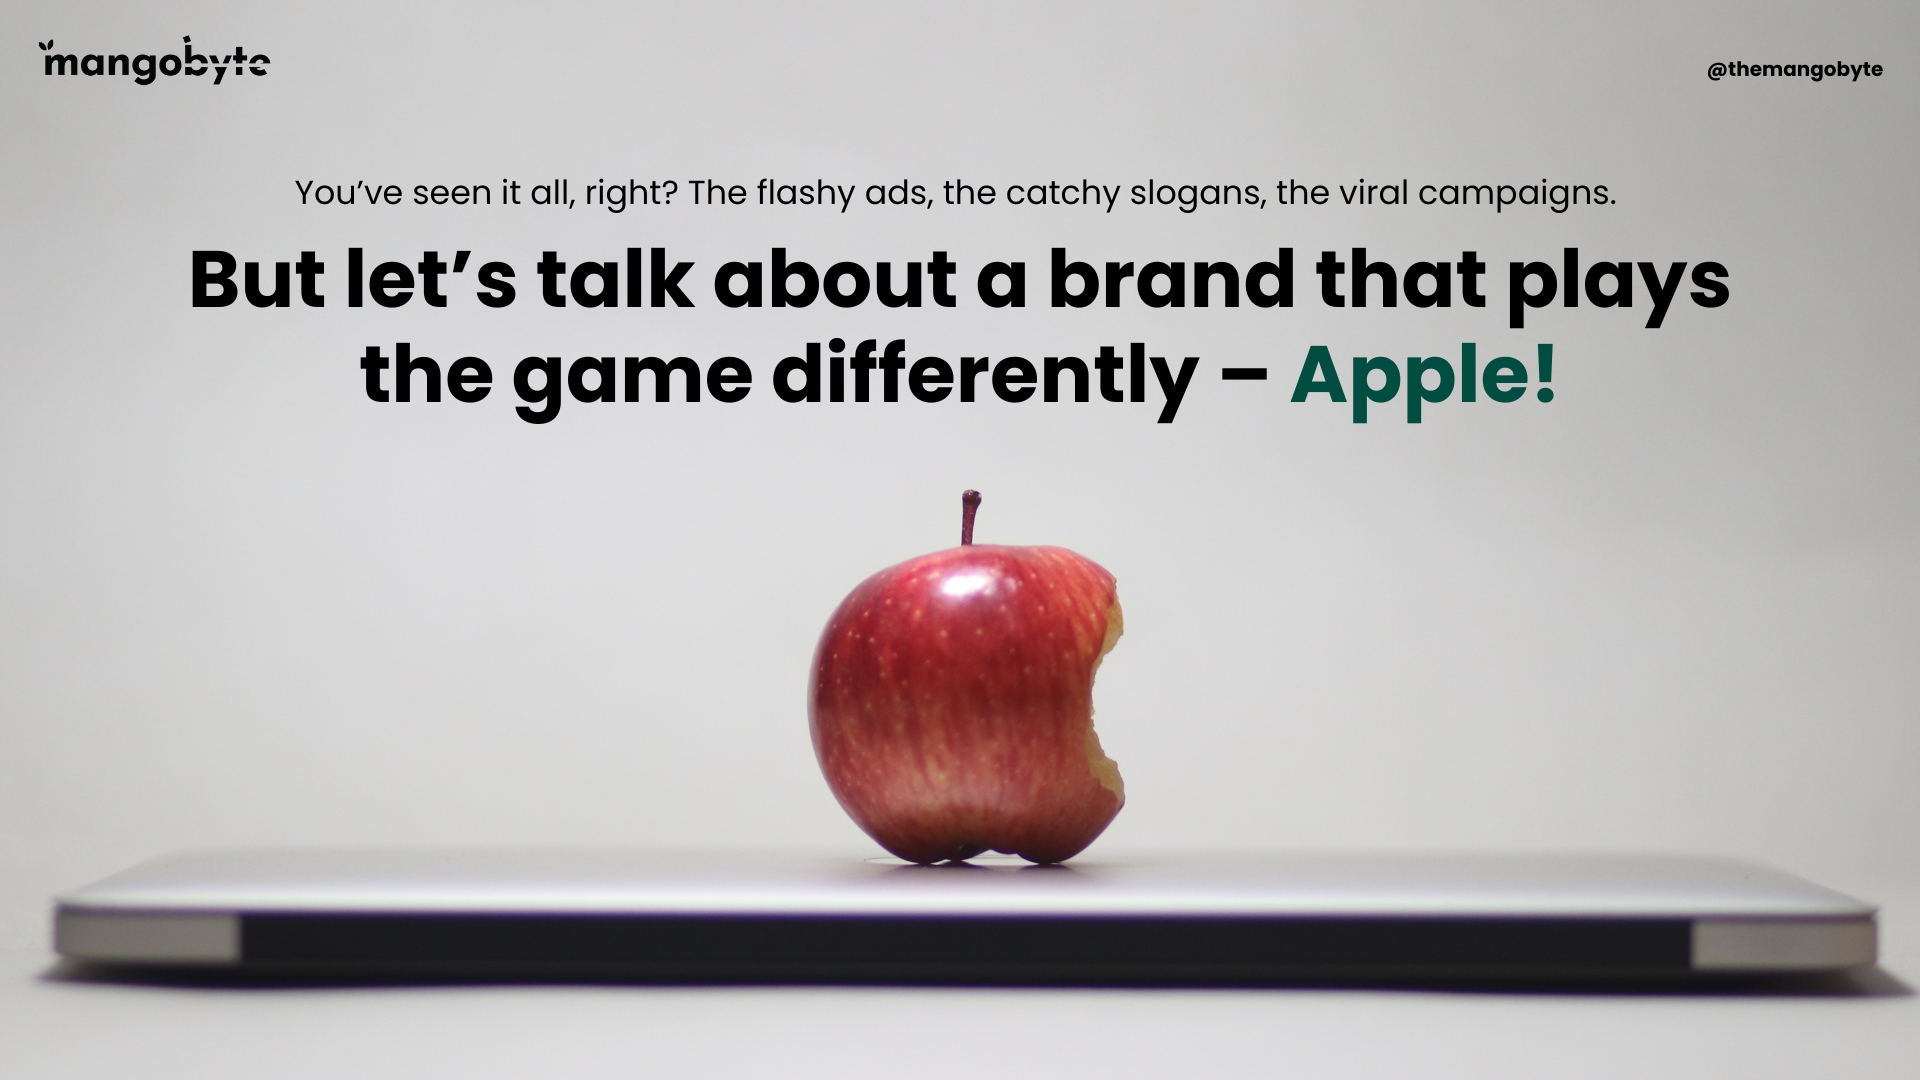 Apple Marketing Strategy